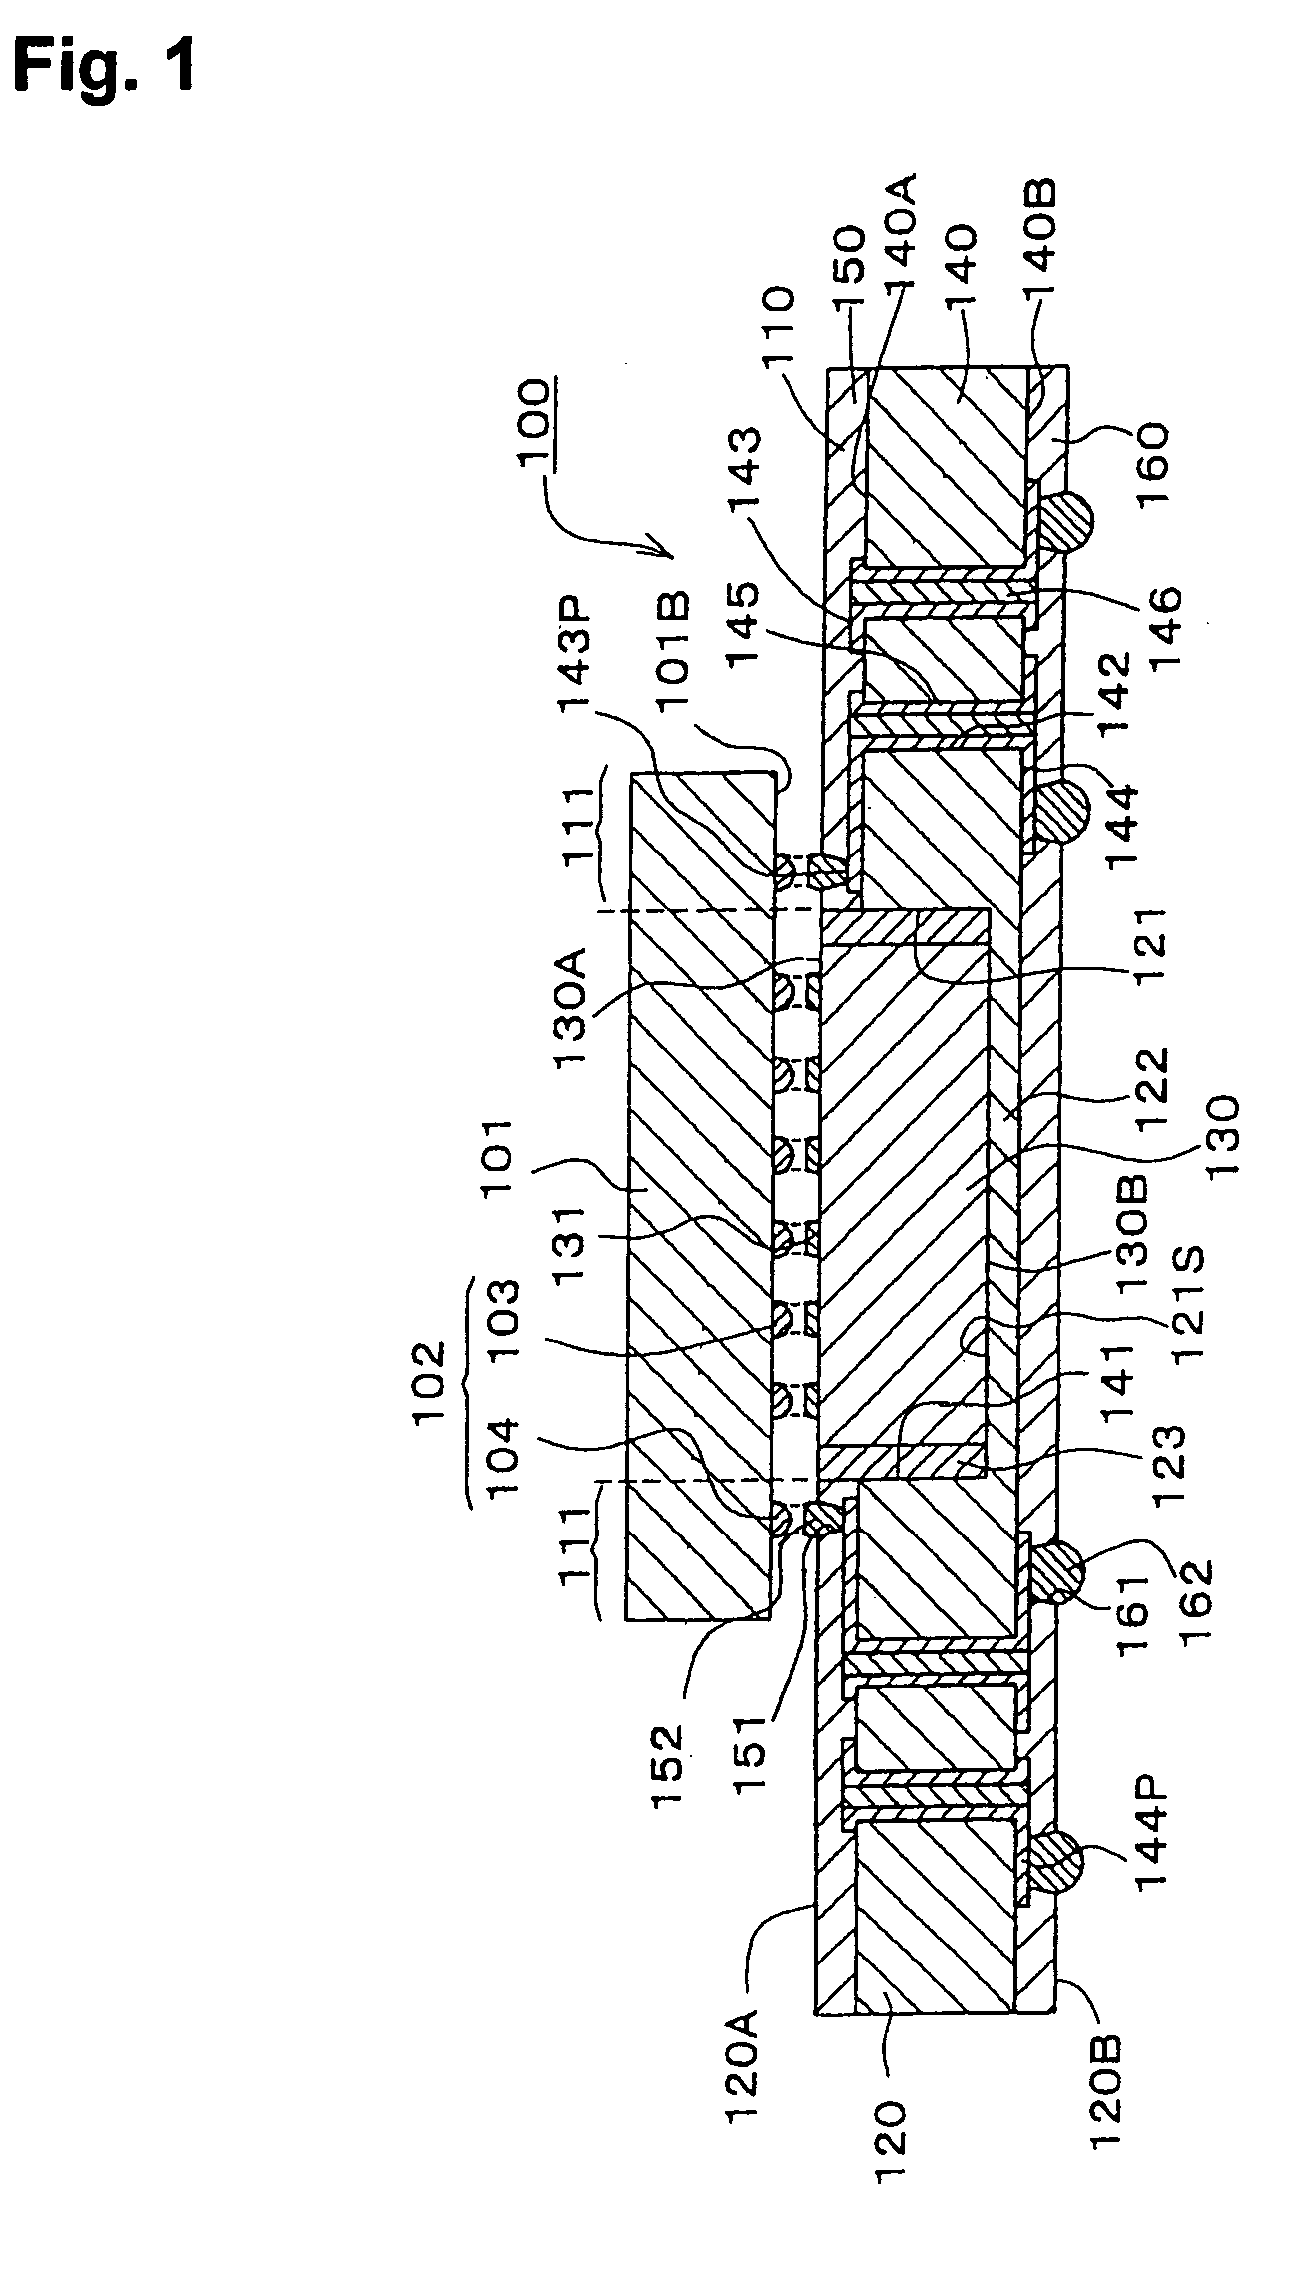 Capacitor-built-in type printed wiring substrate, printed wiring substrate, and capacitor